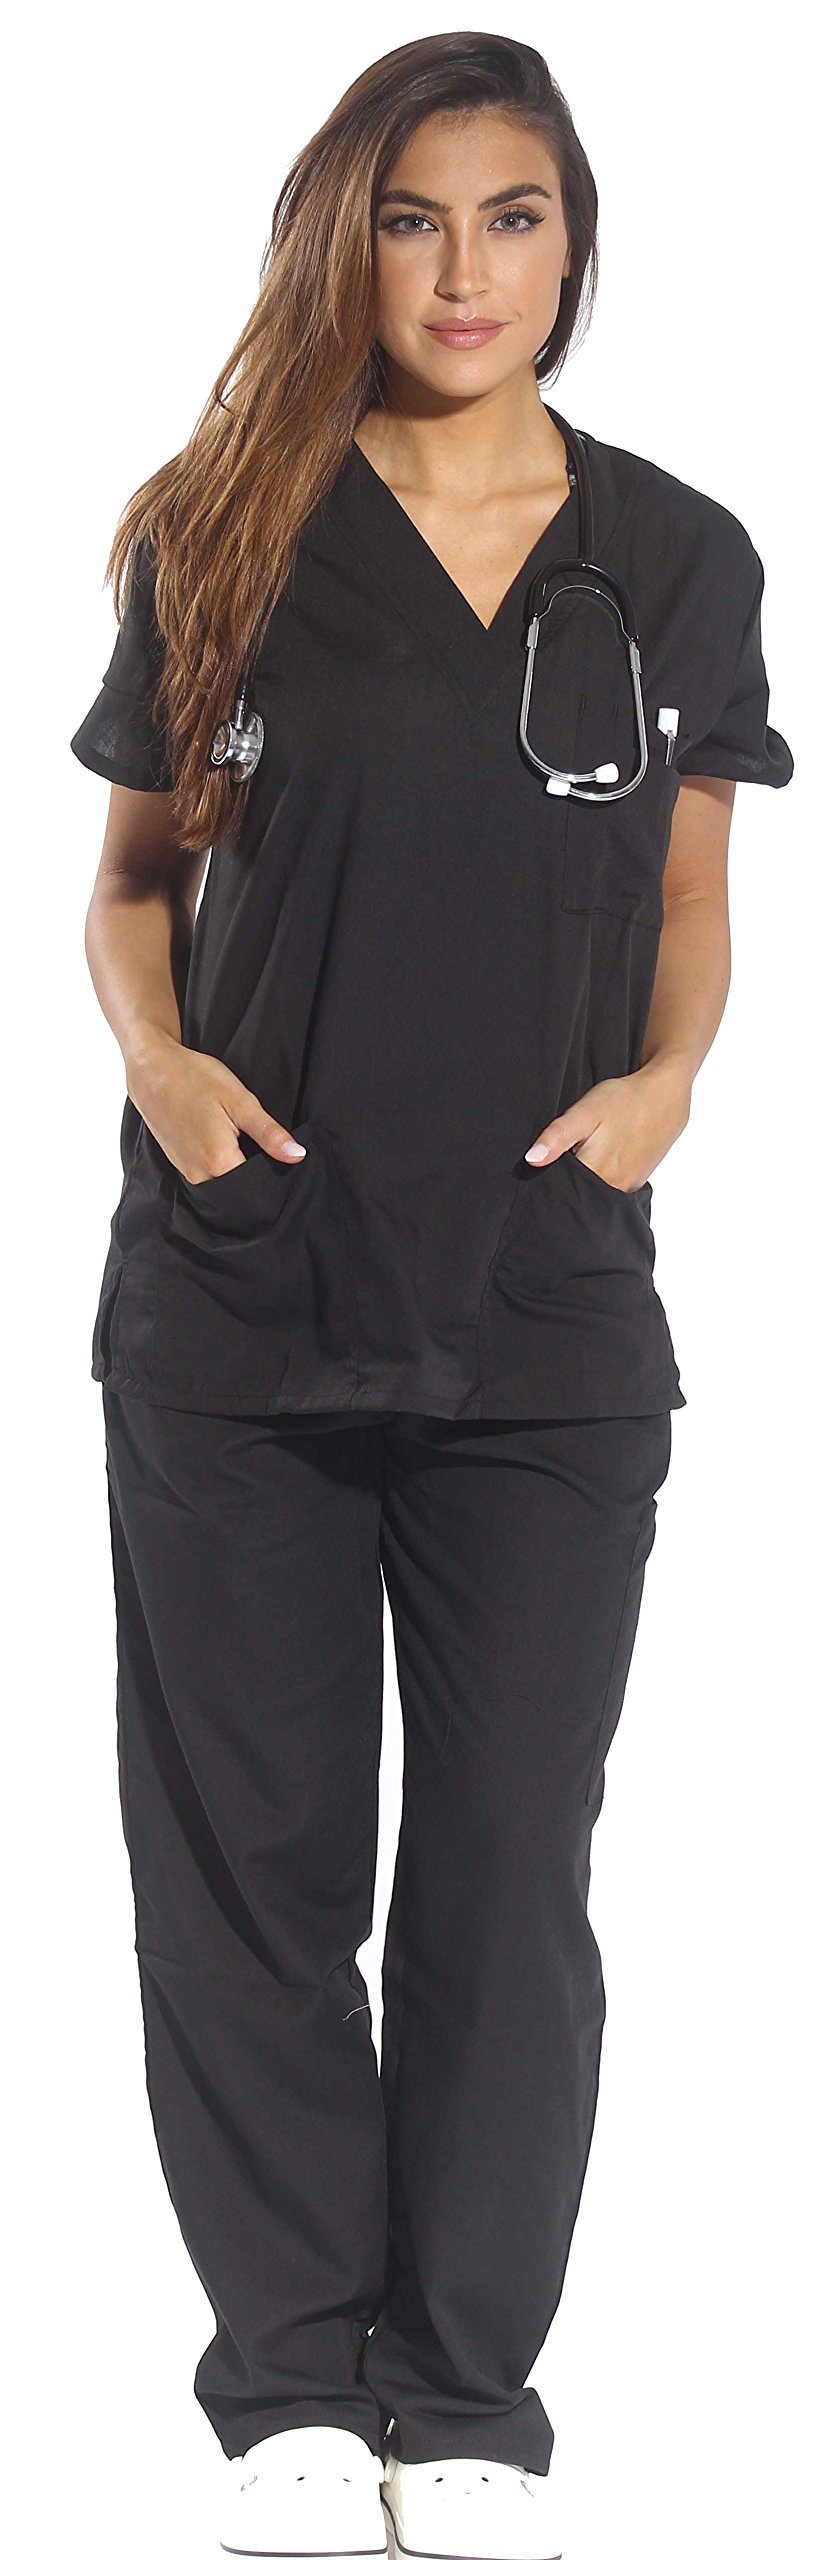 Just Love Women's Scrub Sets Six Pocket Medical Scrubs Black Size Medium  Yex7 for sale online 